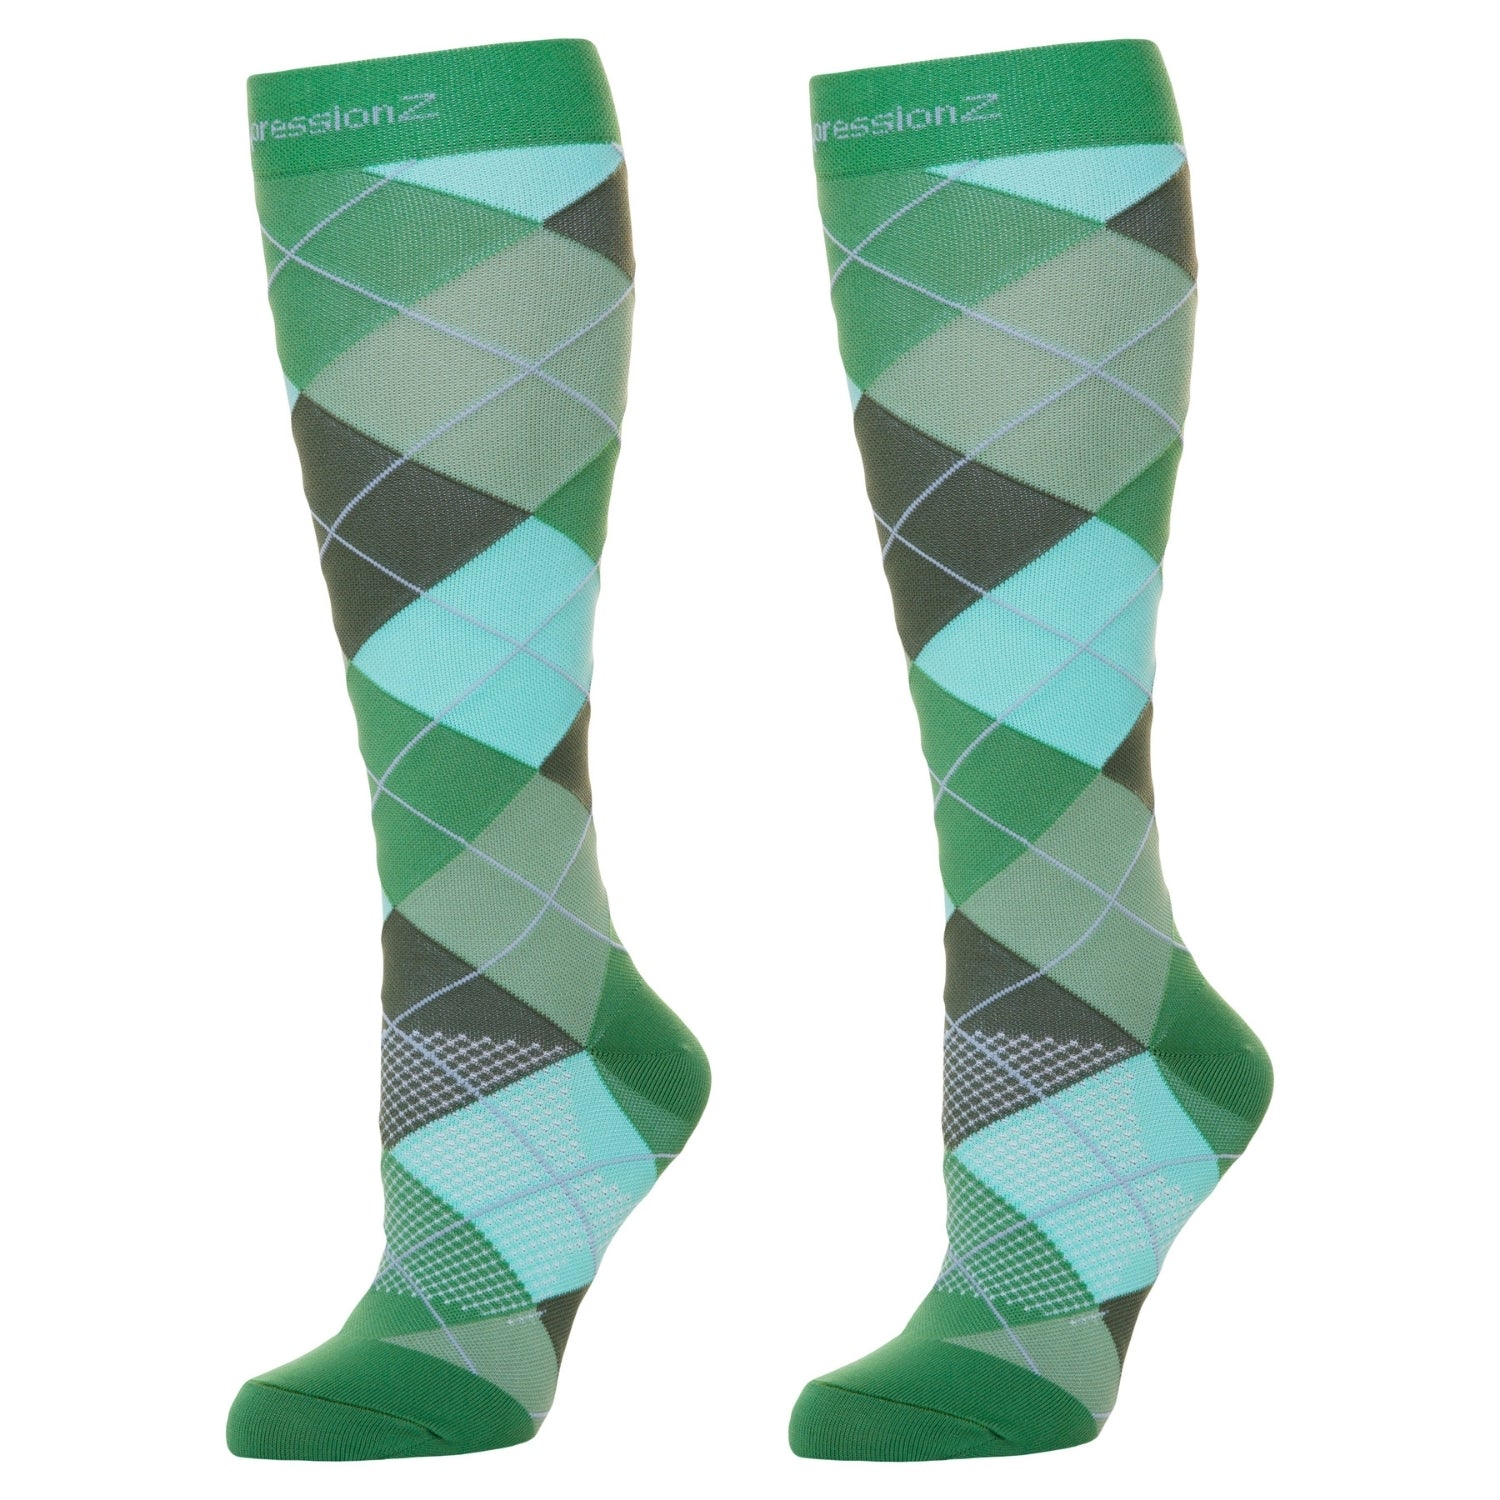 Compression Socks (30-40 mmHg) - Argyle Green